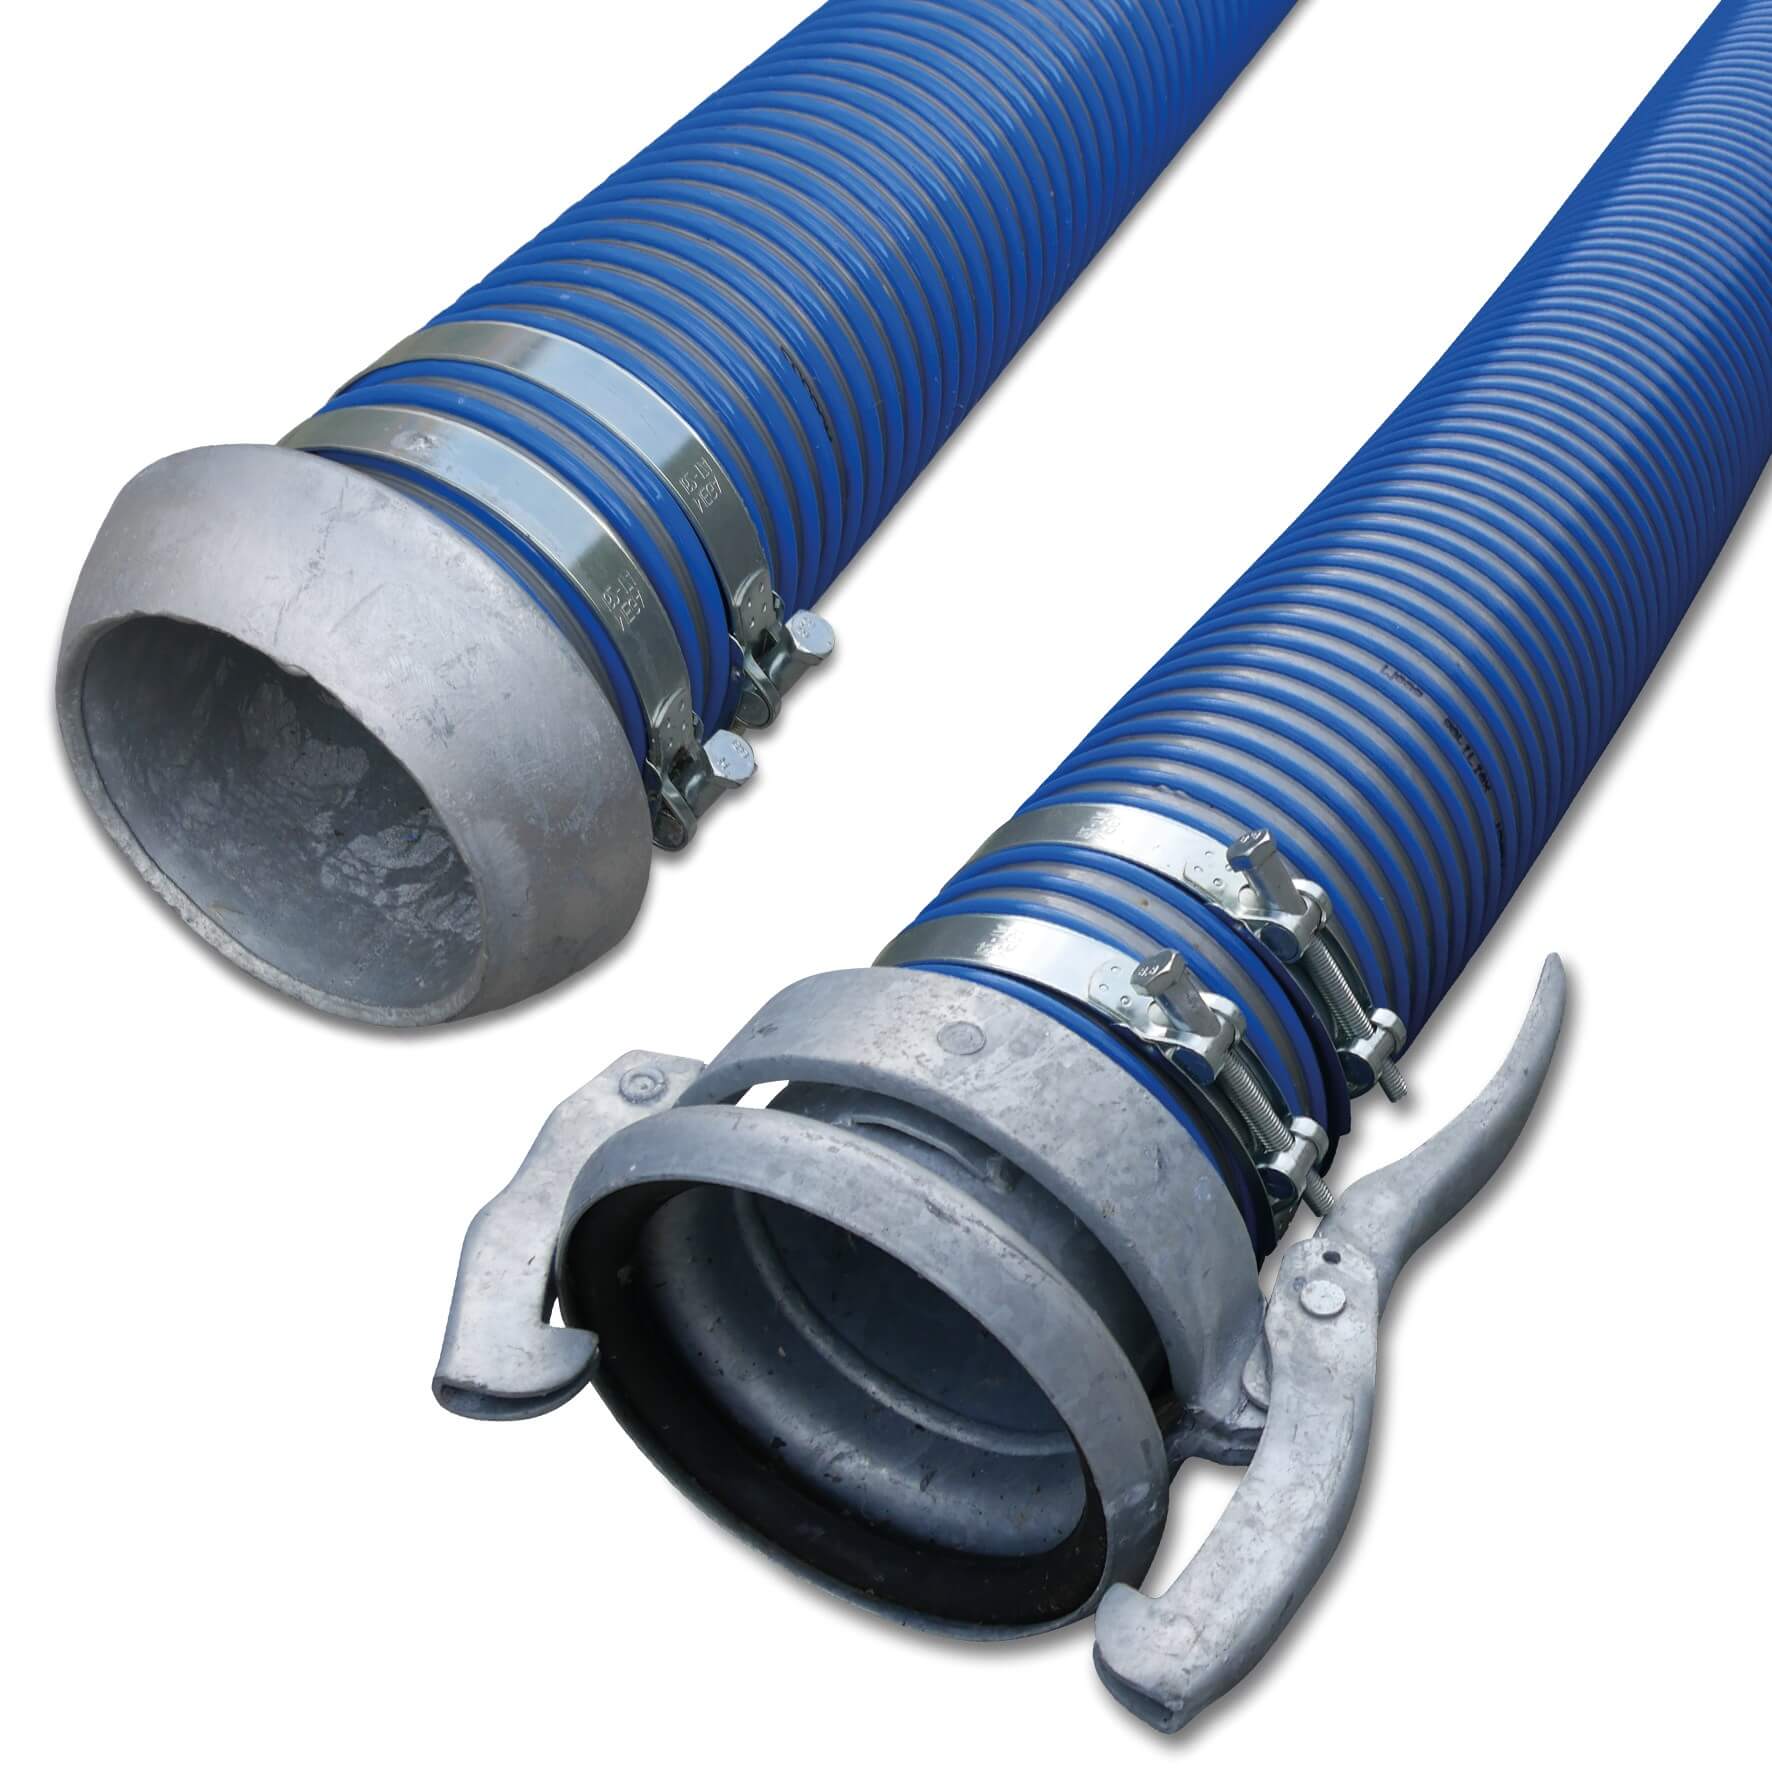 Spiralsaug- und Druckschlauch PVC 152 mm V-Teil Kardan x M-Teil Kardan 2bar Blau/Grau 4m type Agriflex